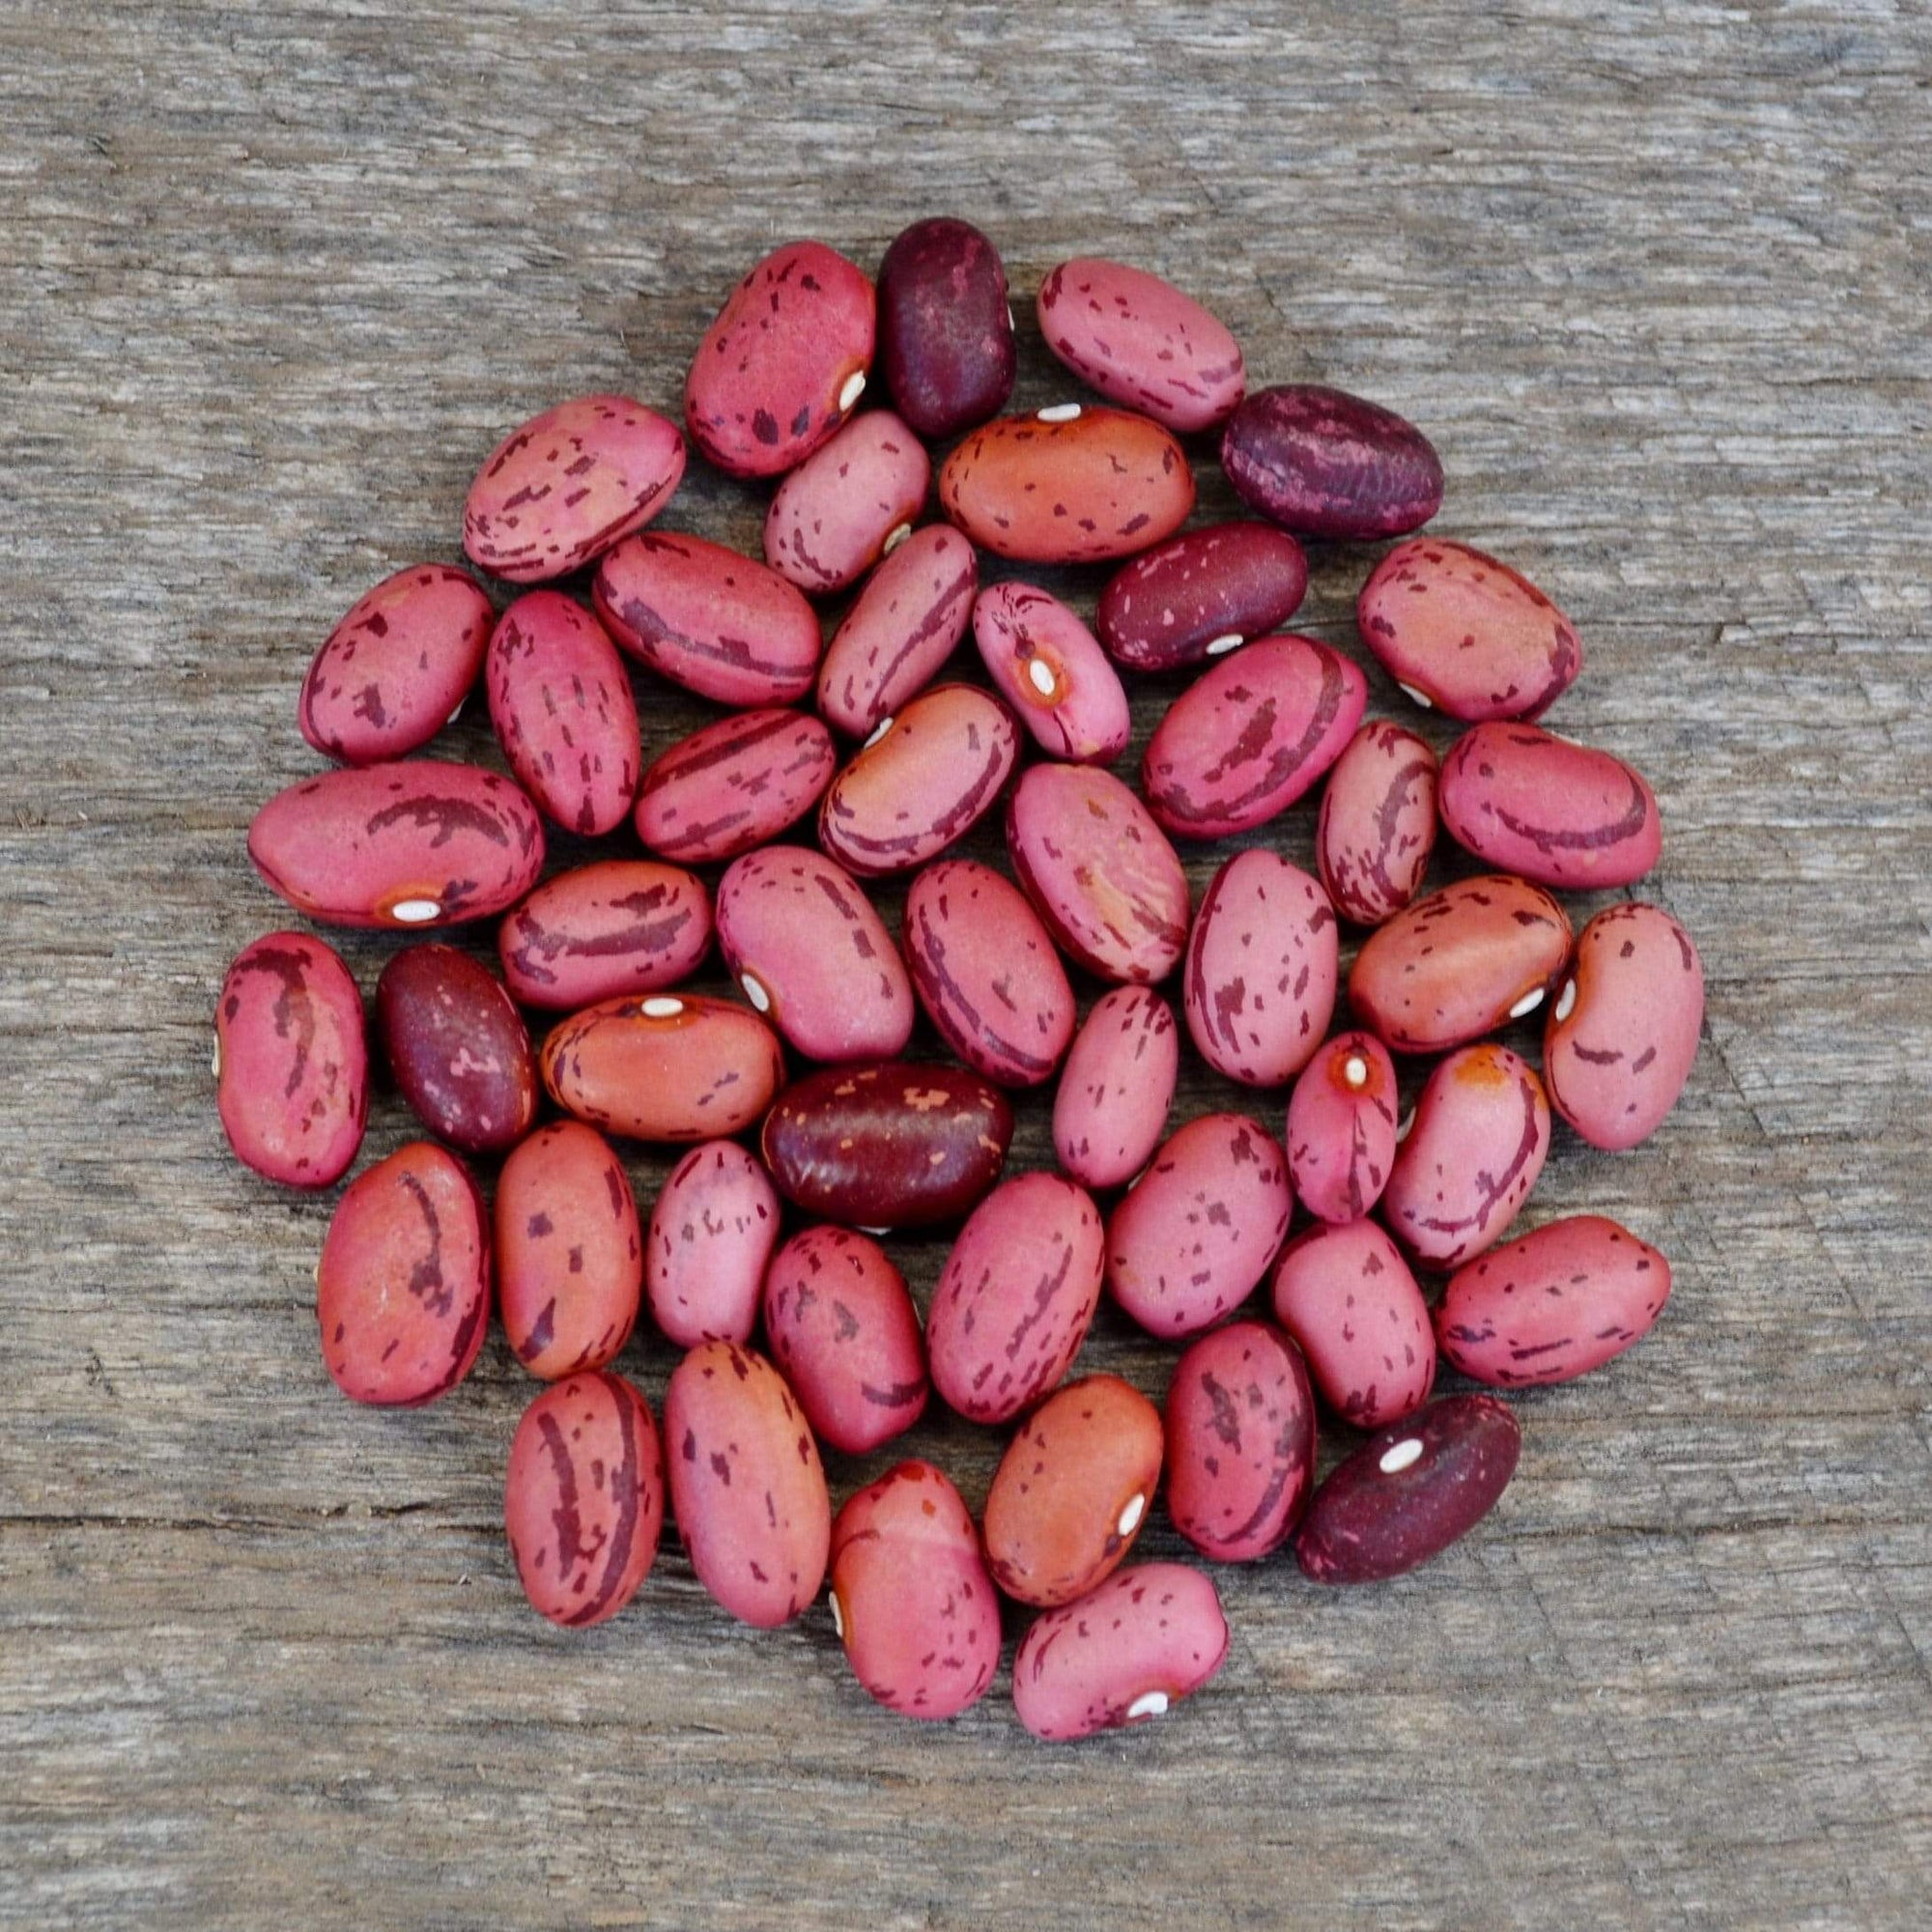 Vermont Cranberry Shelling Bean